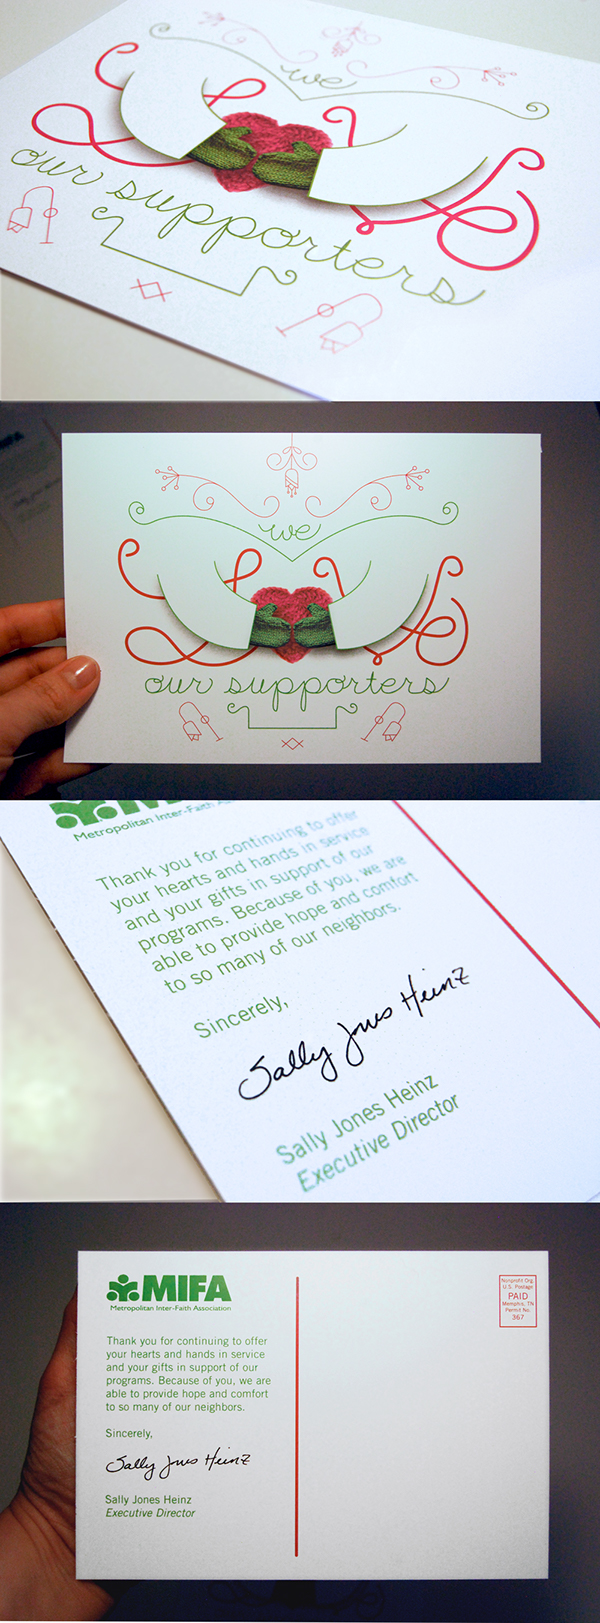 MIFA Memphis santana singleton valentine Love heart hugs supporter thank you card postcard vector knite lettering